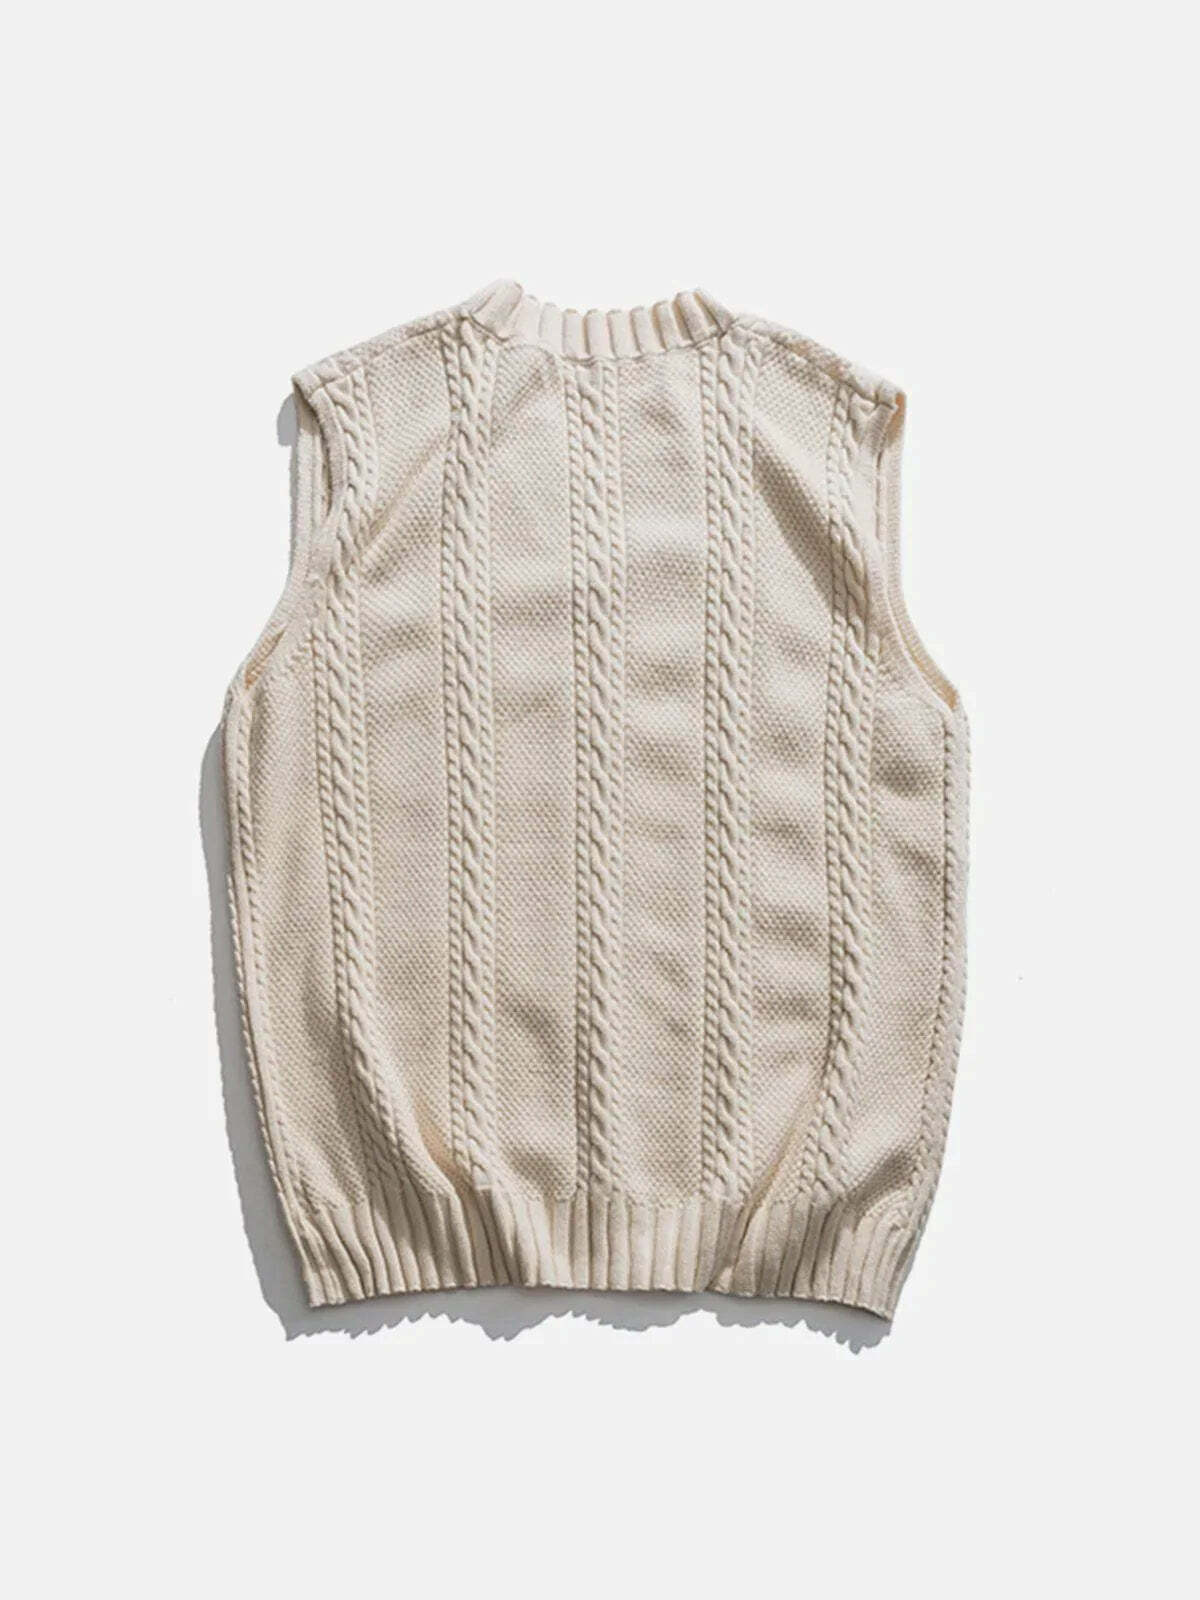 braided knit sweater vest edgy y2k fashion essential 3071